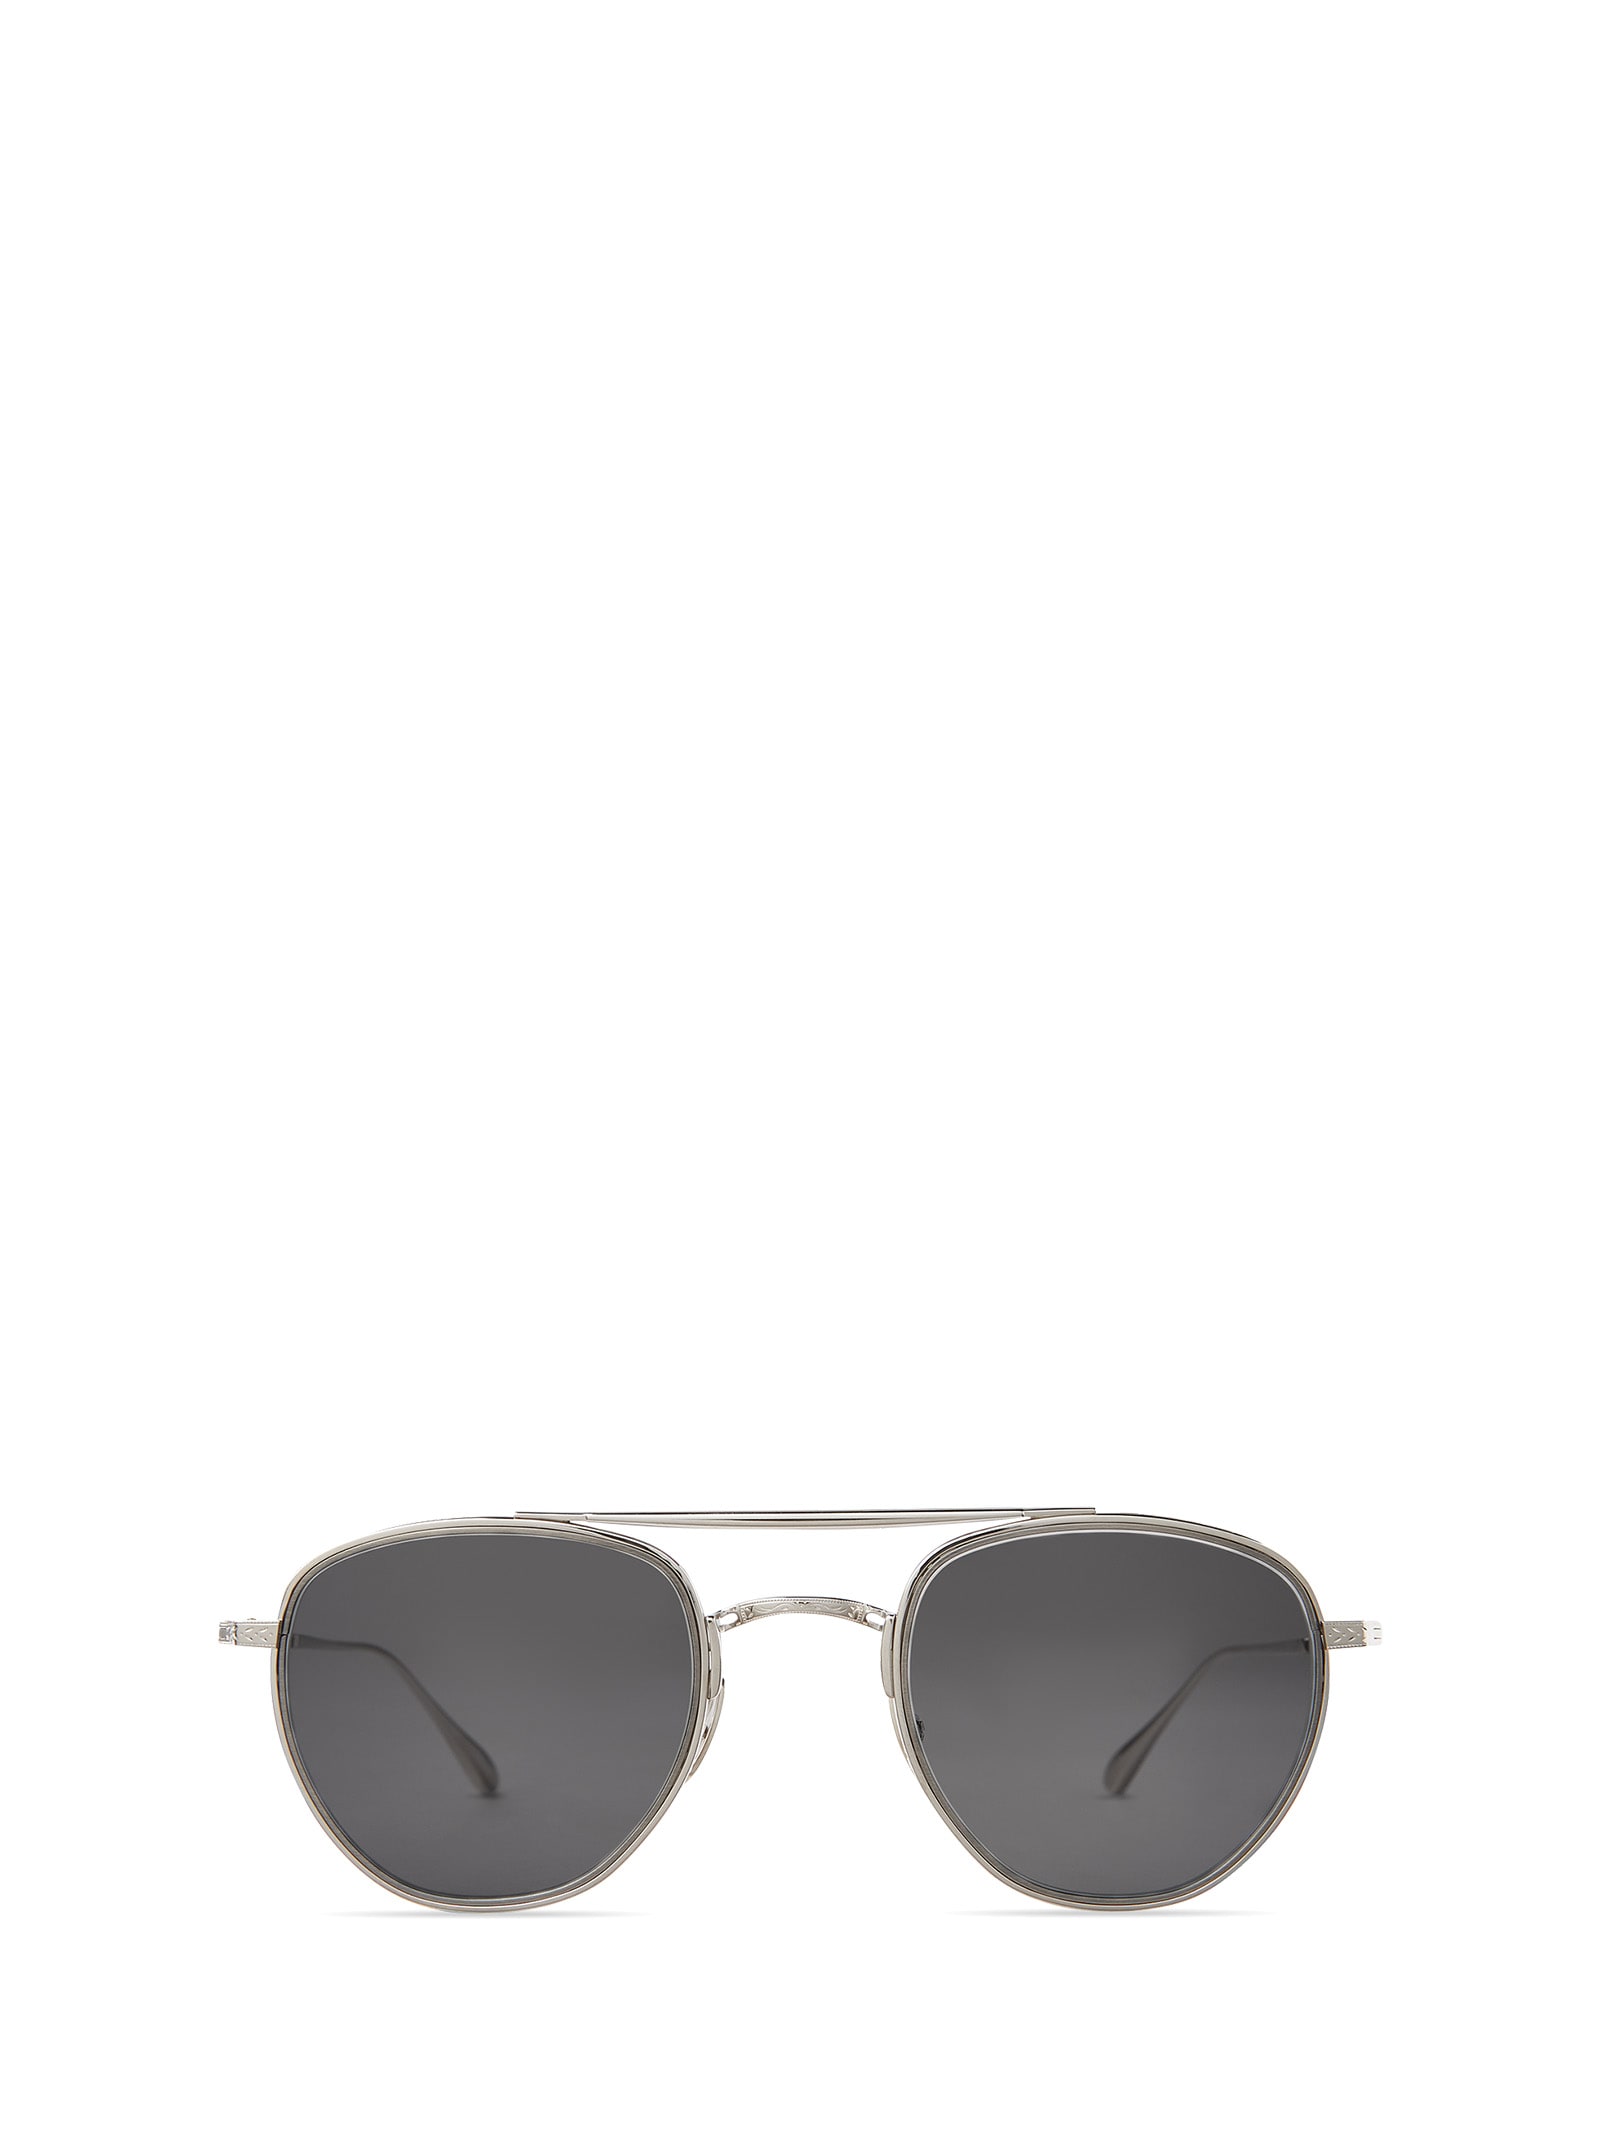 Roku Ii S Platinum-pewter Sunglasses